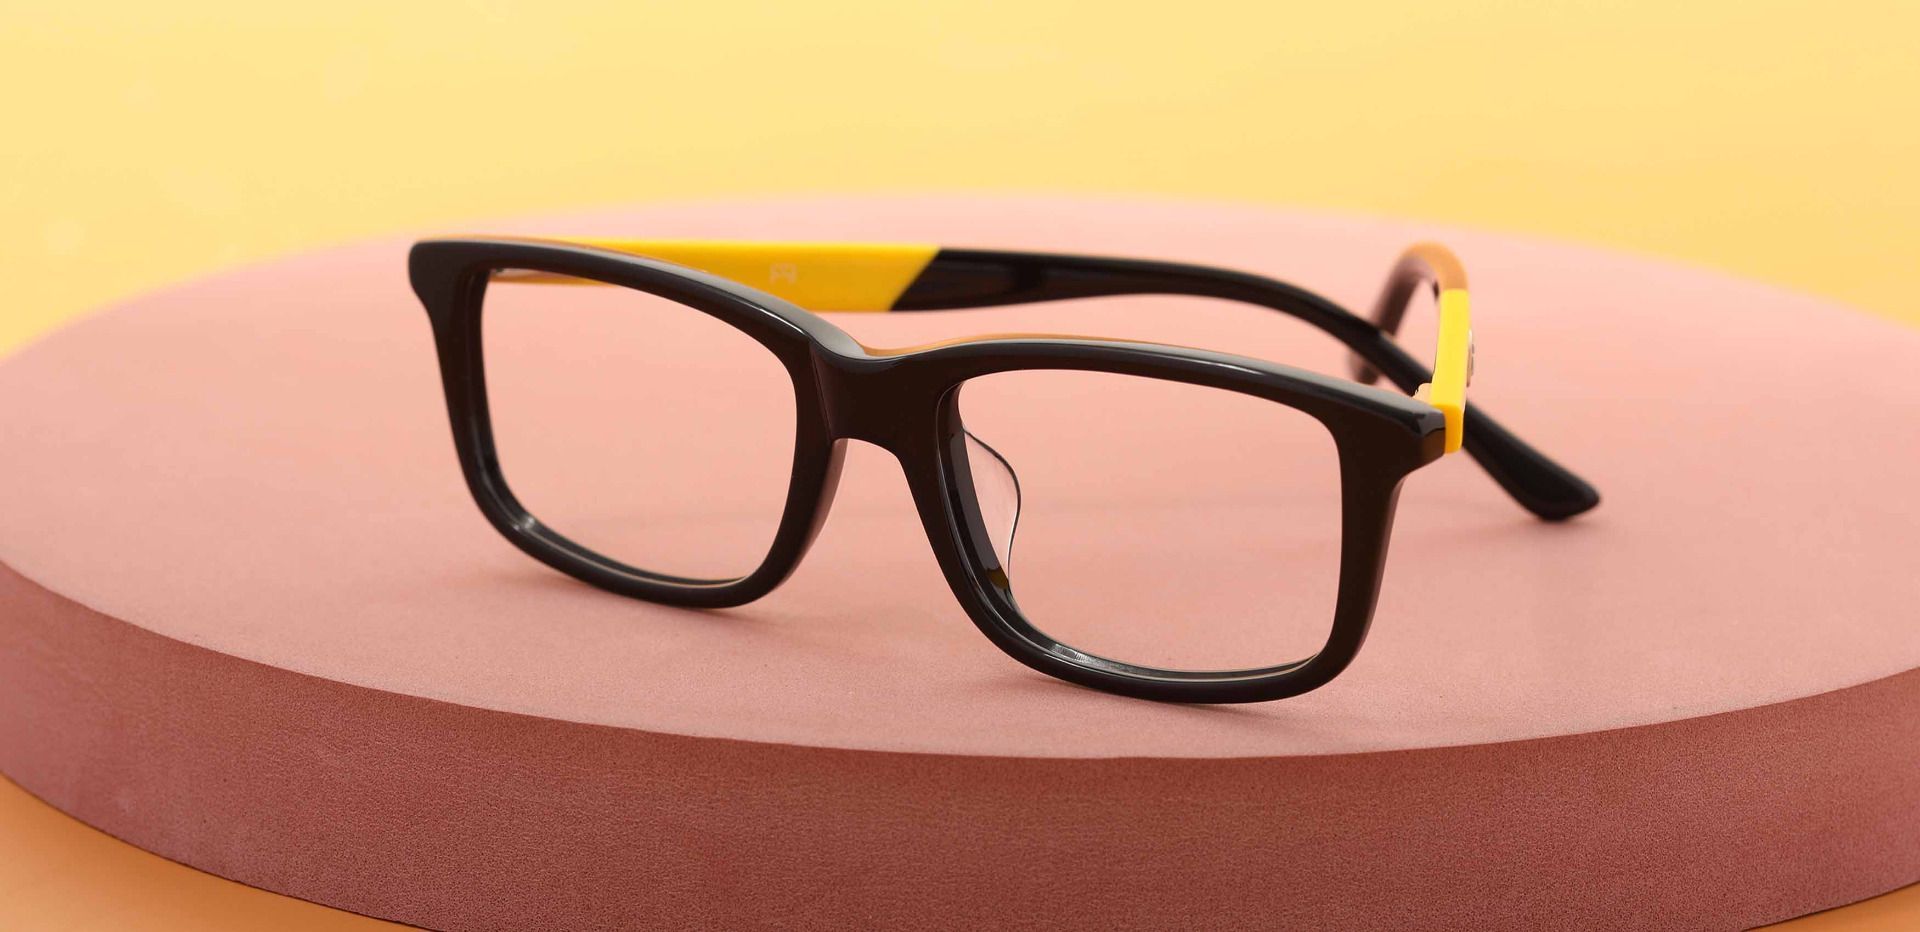 Allegheny Rectangle Eyeglasses Frame - Black-yellow